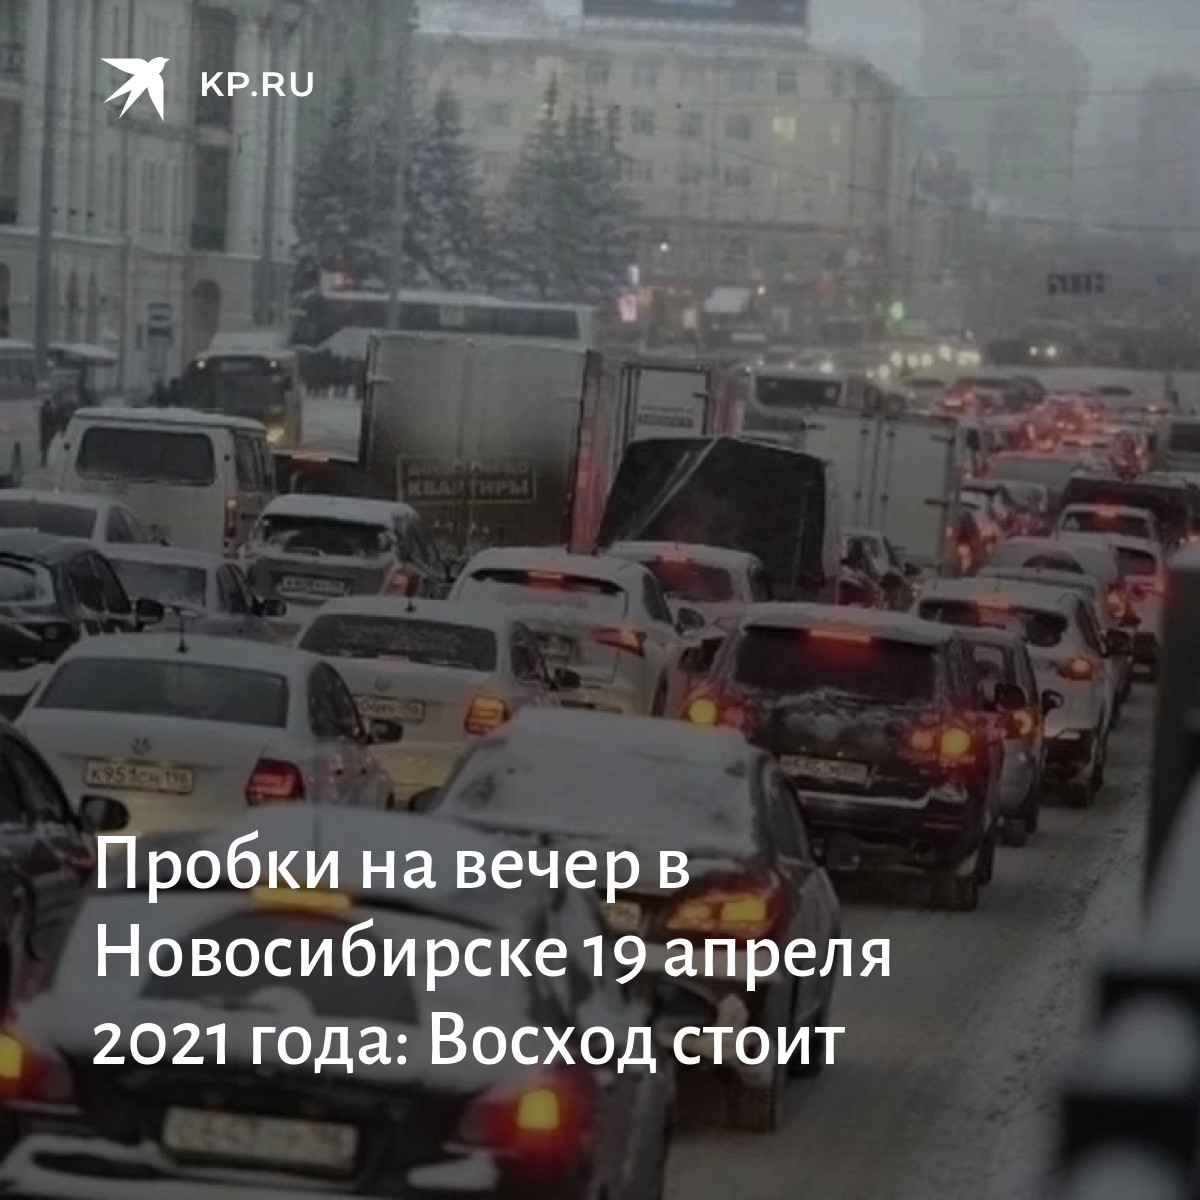 Nsk kp ru. Пробки юмор. ЖК цветы видео про пробки. Москва не готова к зиме смешные фото про пробки.